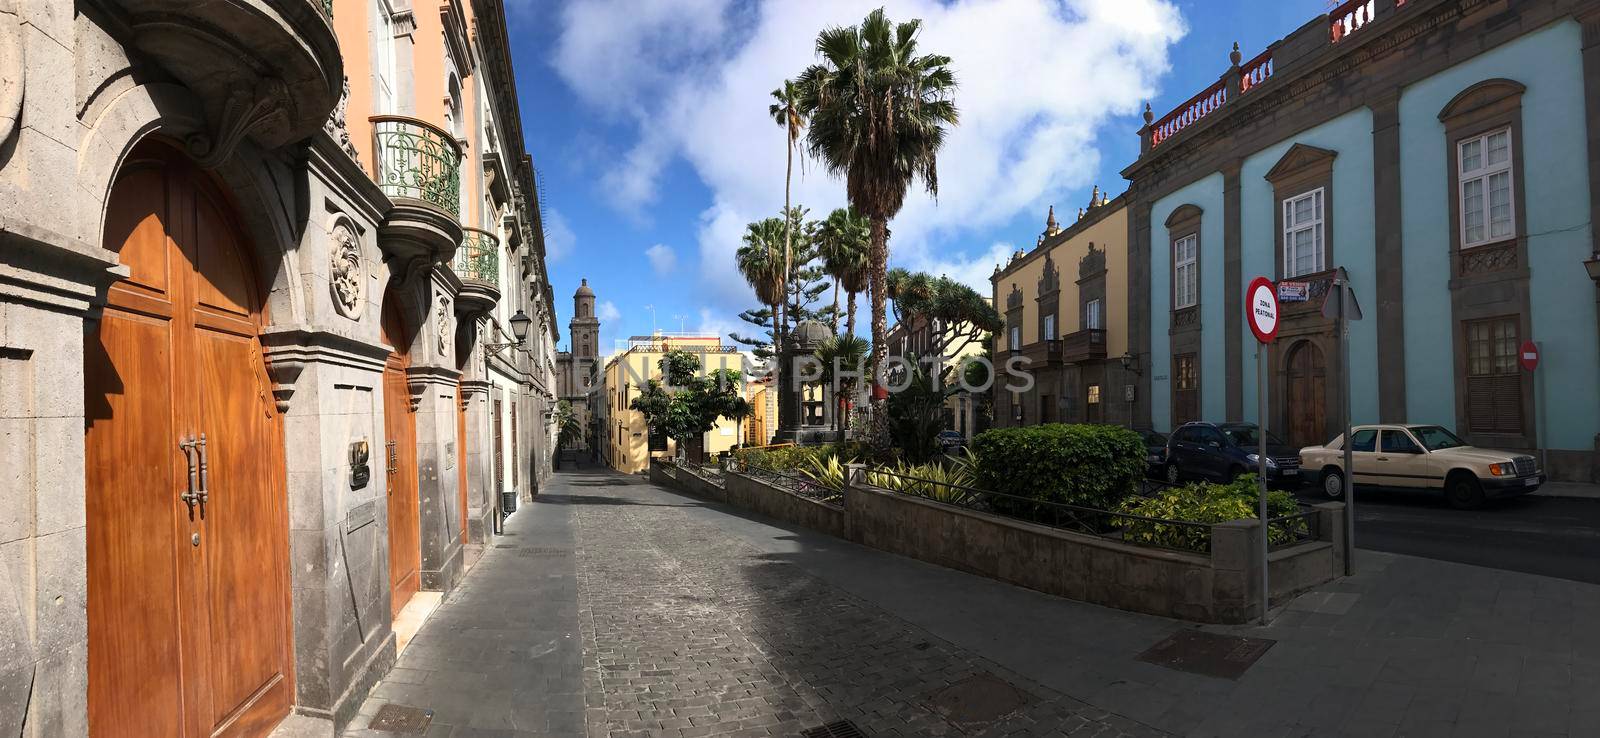 A street in Las Palmas  by traveltelly